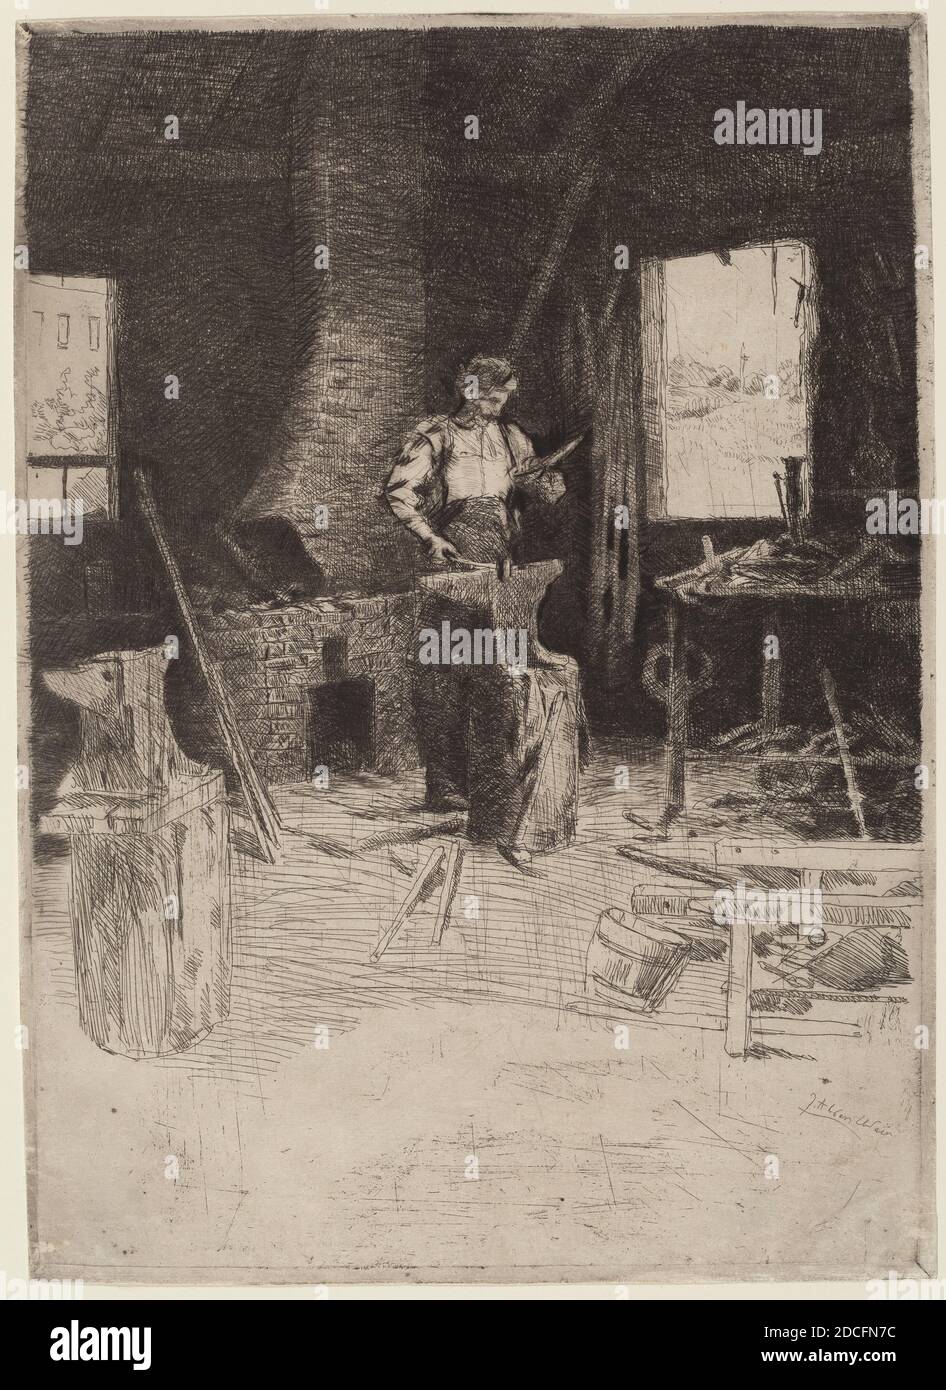 Julian Alden Weir, (artist), American, 1852 - 1919, The Blacksmith's Shop, etching Stock Photo